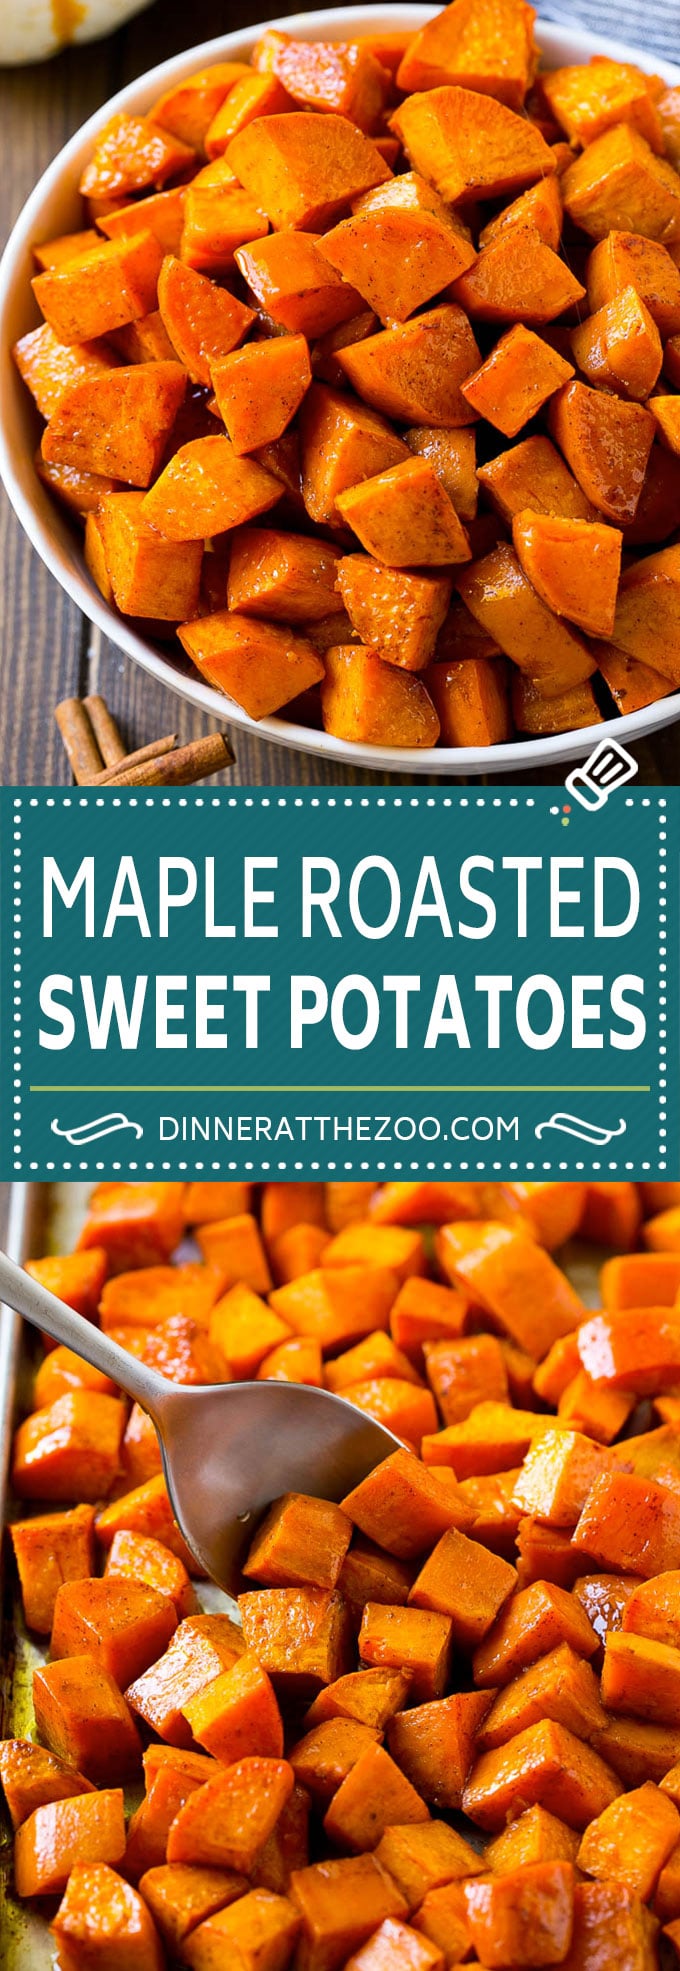 Maple Roasted Sweet Potatoes Recipe | Easy Sweet Potatoes | Baked Sweet Potatoes | Sweet Potato Side Dish #sweetpotatoes #cinnamon #maple #butter #fall #sidedish #dinner #dinneratthezoo